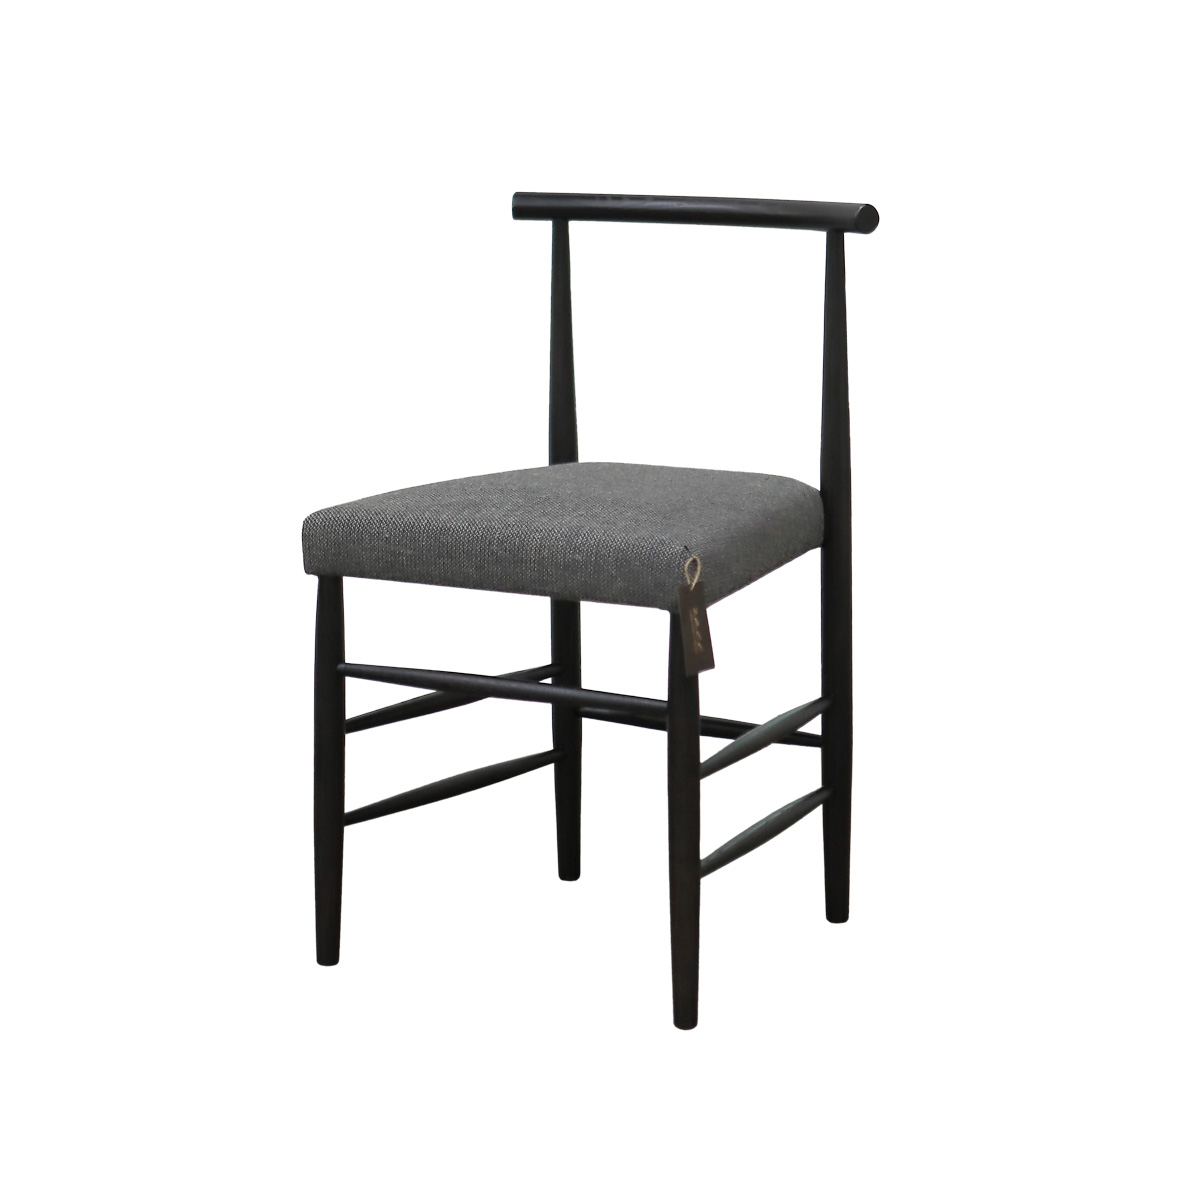 Zacc collection by SEDEC Cane Plus Dining Chair 케인 플러스 식탁 의자 - R197 (로스티드)